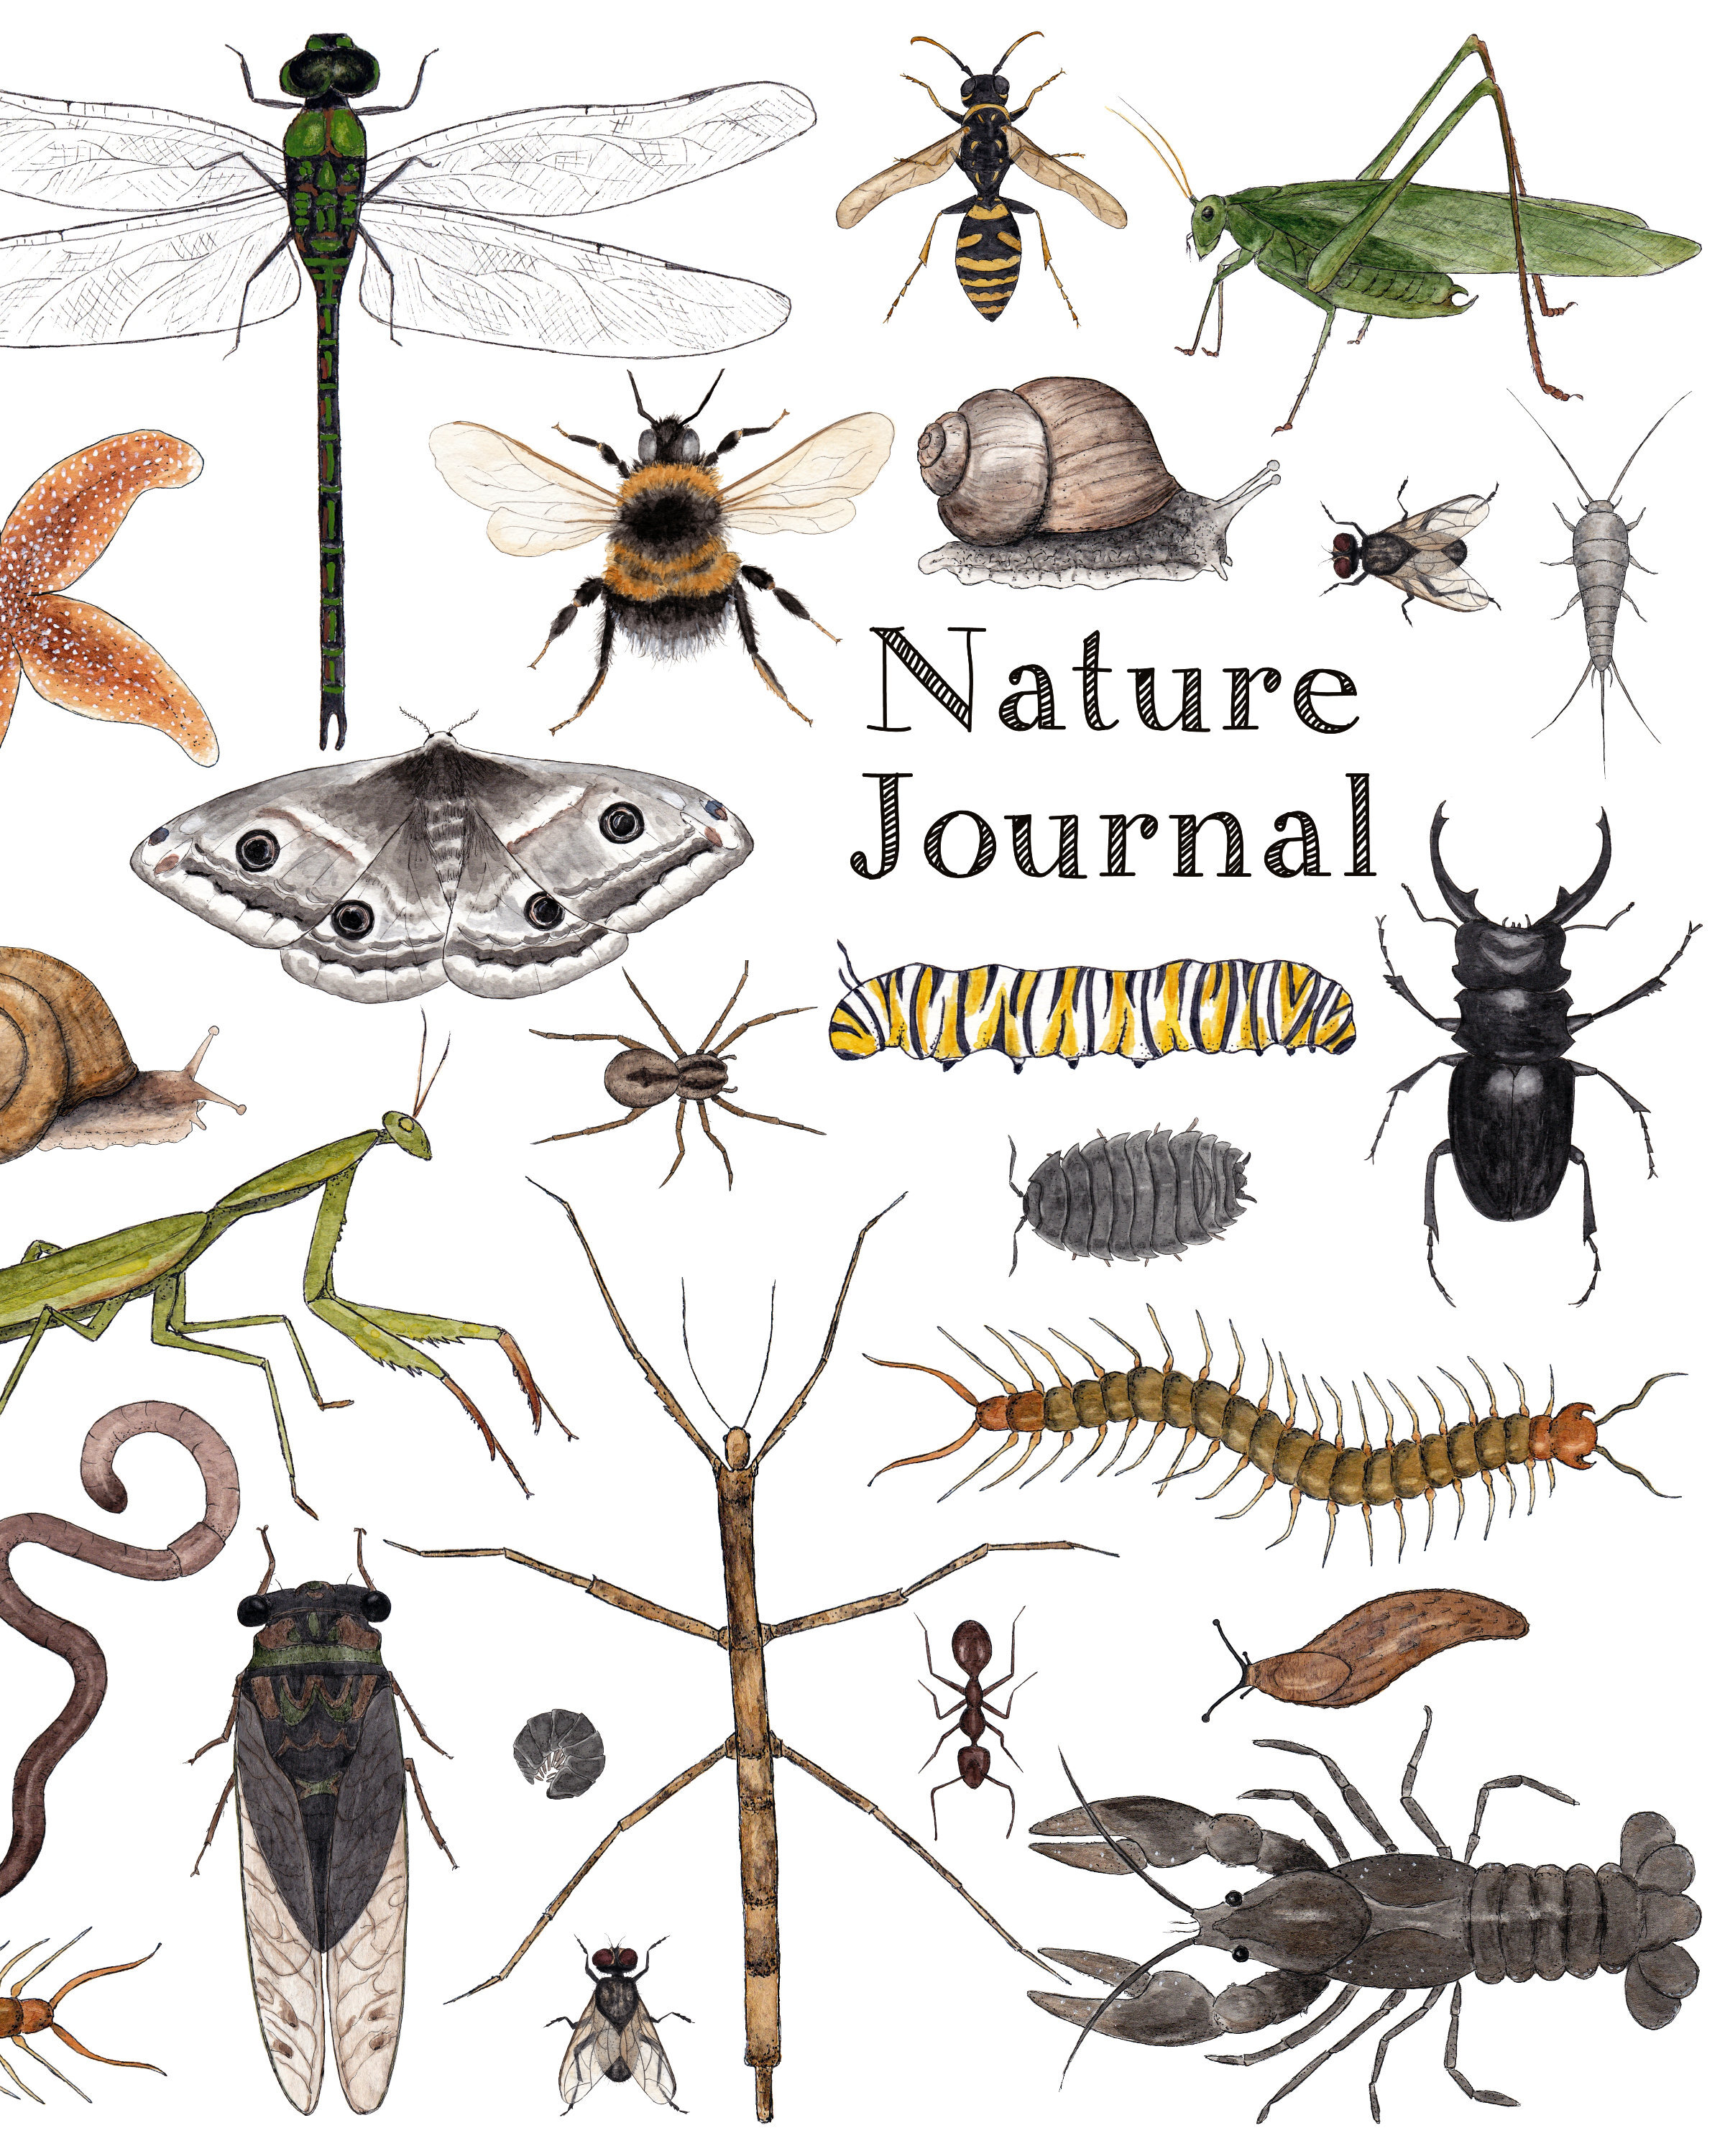 Nature Journal - Minibeasts Cover Art 